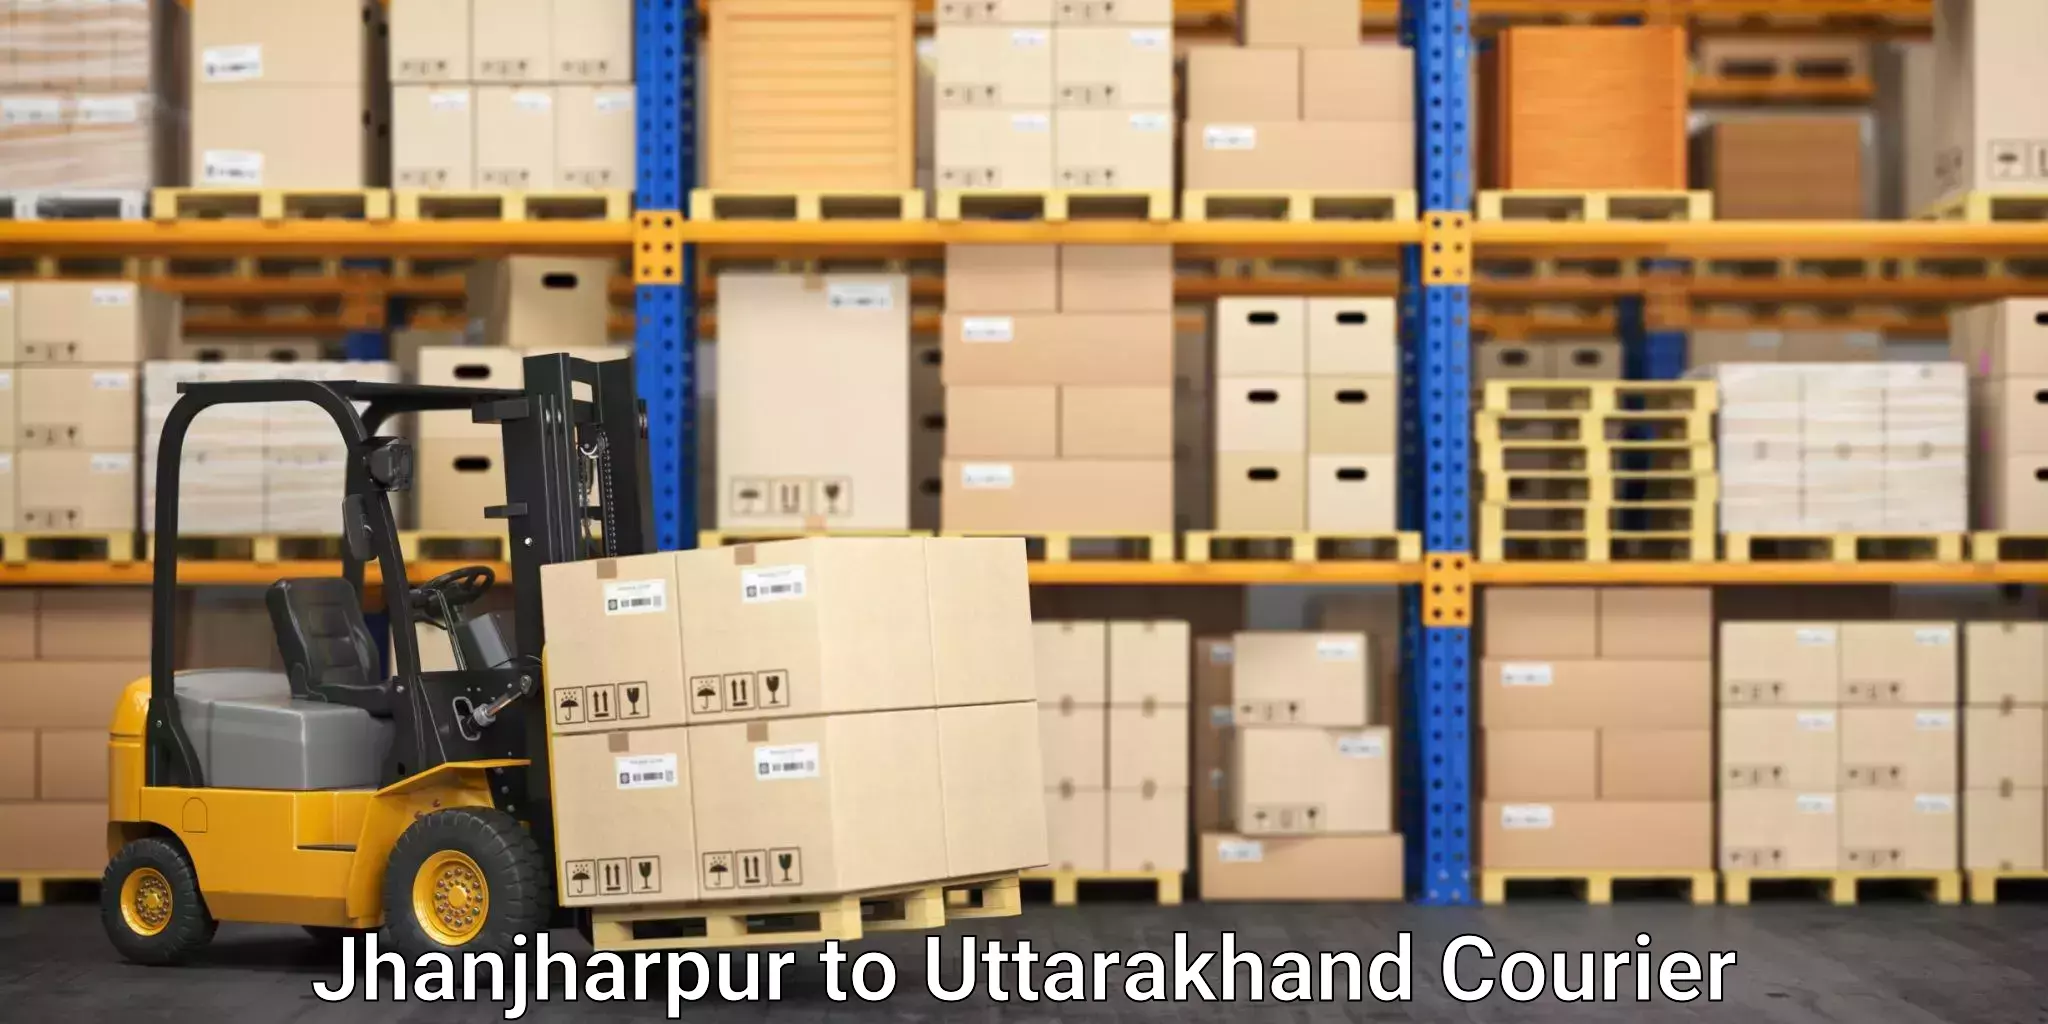 Furniture transport and storage in Jhanjharpur to Nainital